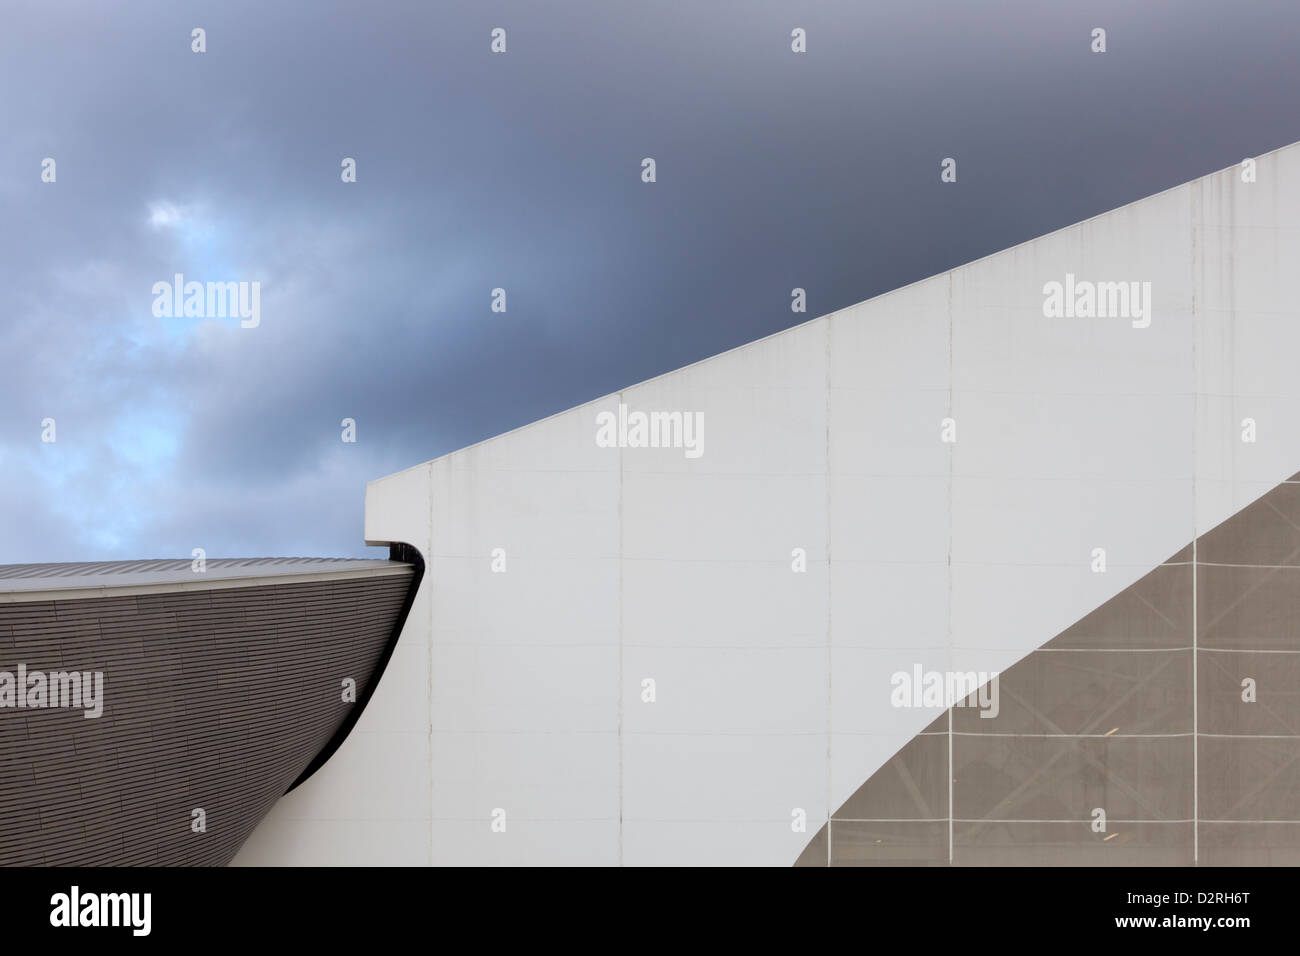 London Aquatics Centre for the 2012 Summer Olympics, designed by Zaha Hadid - roof detail Stock Photo